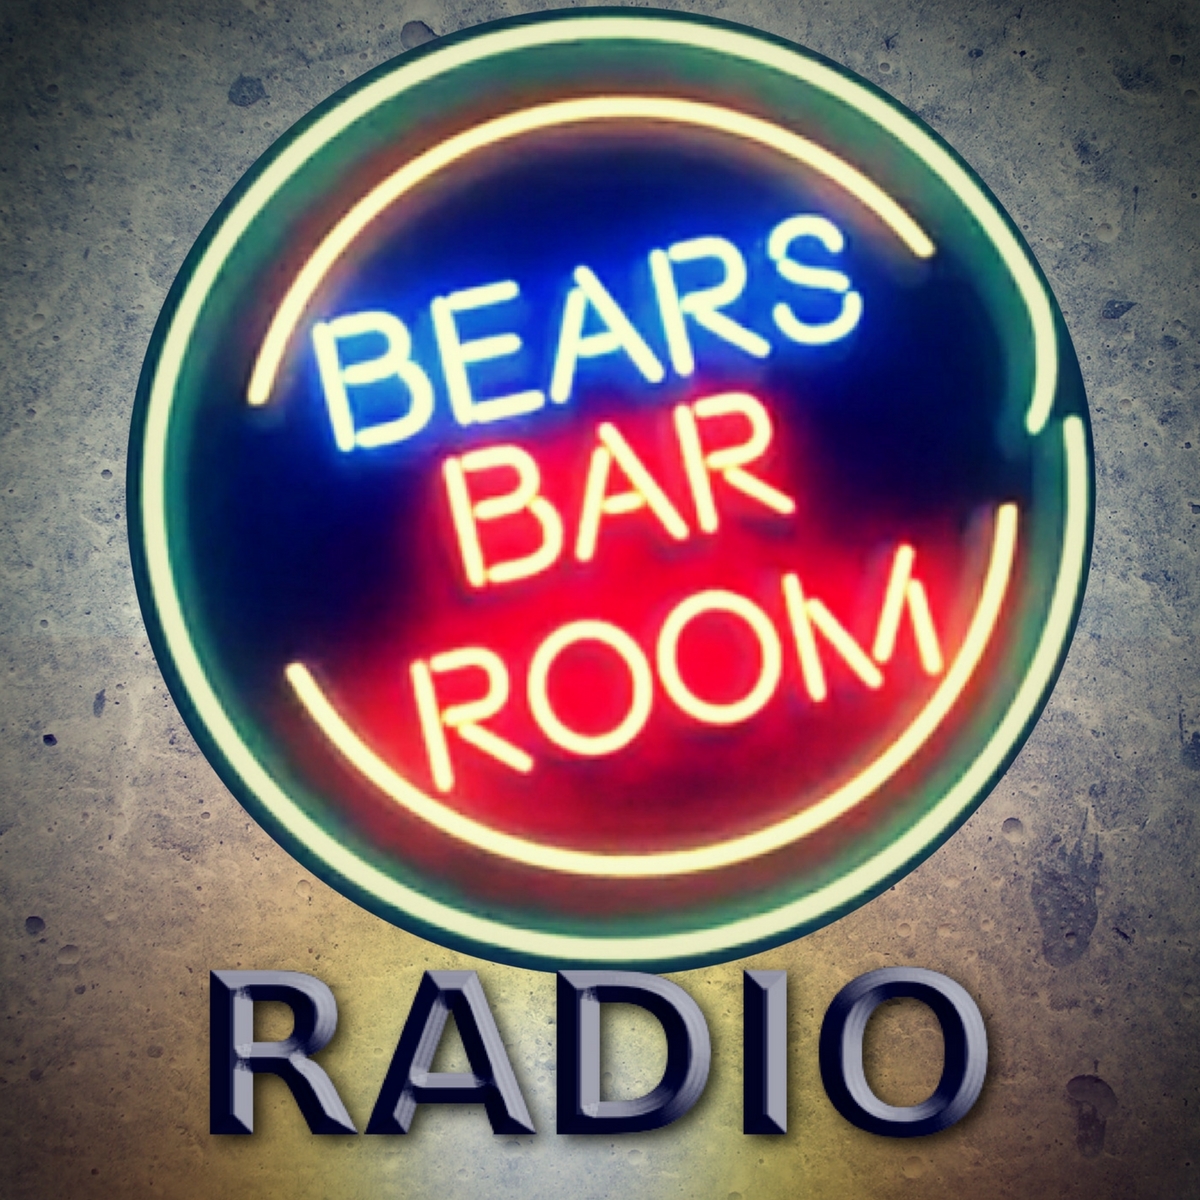 BBRR: Trubisky Arrives - Bears / Broncos Preseason Game